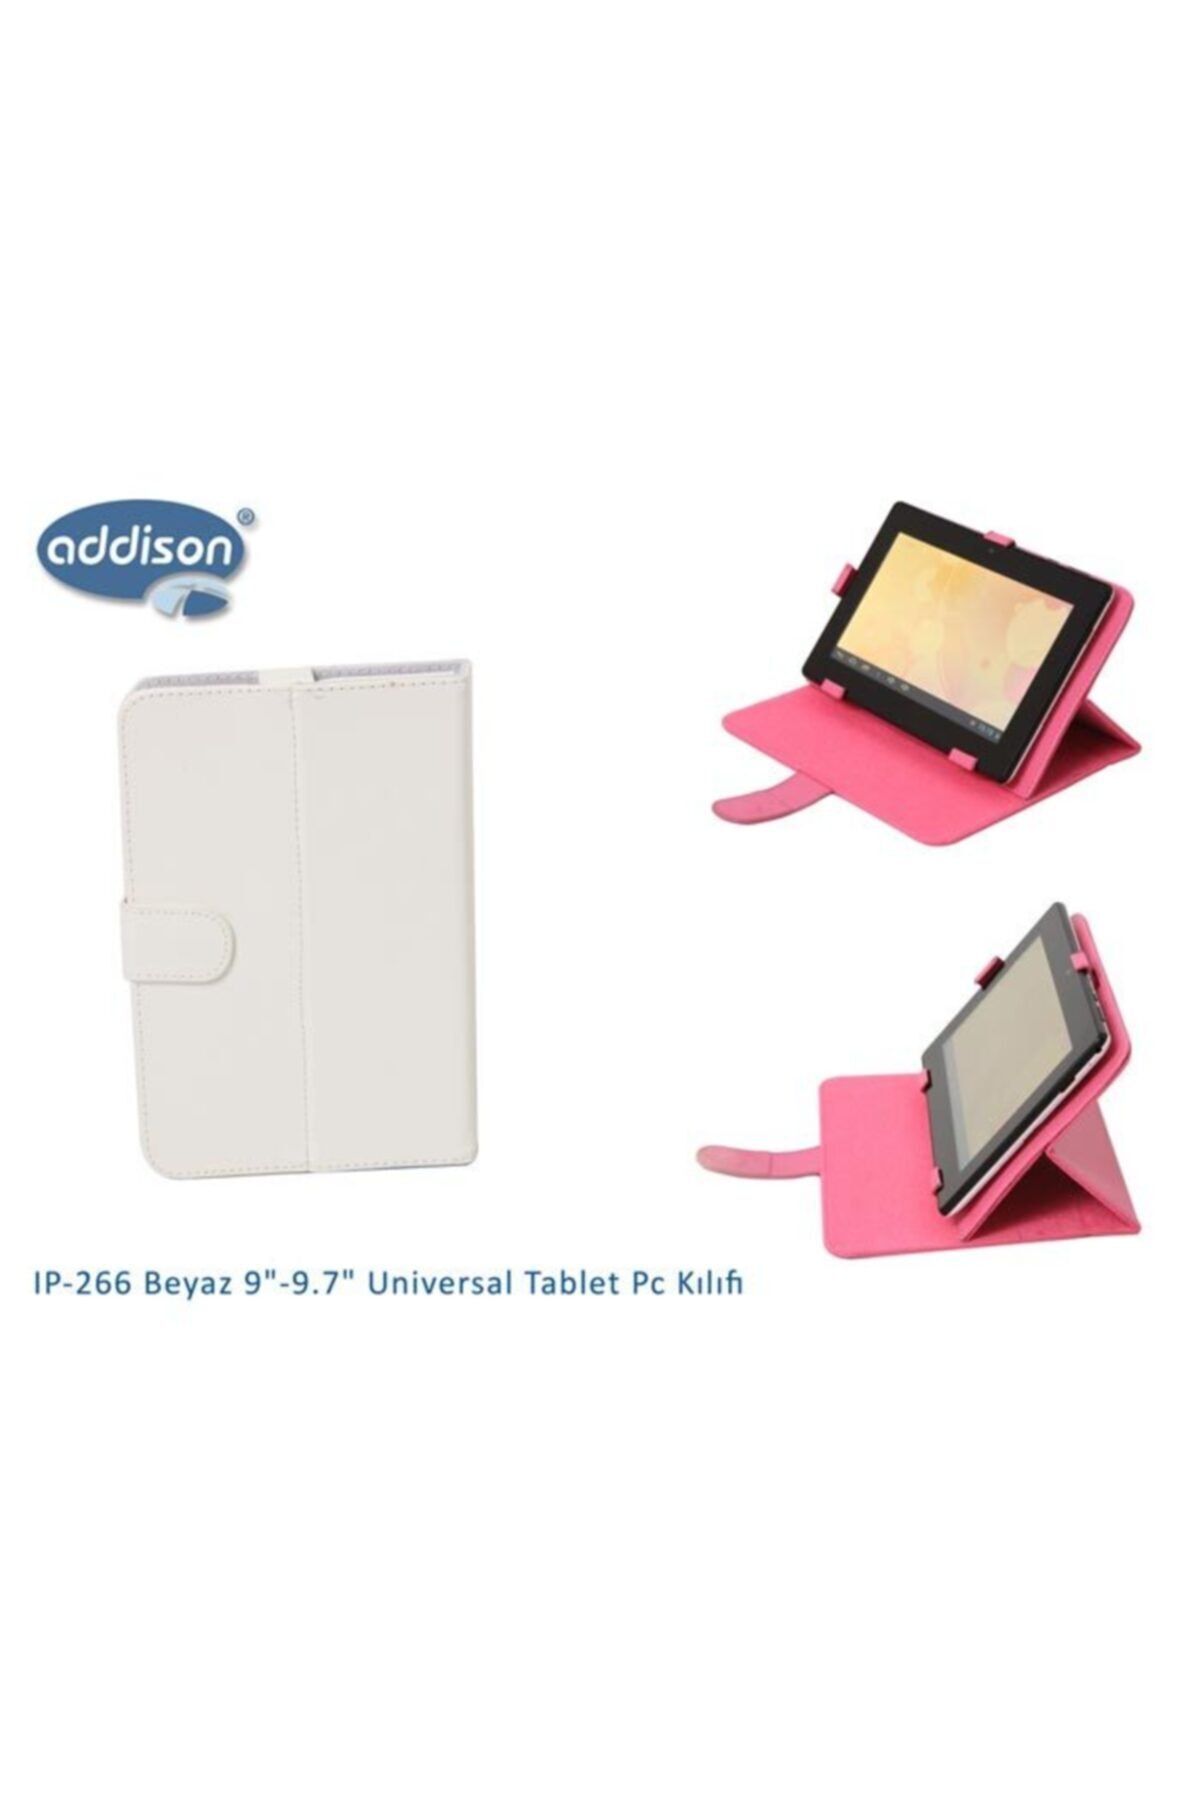 Addison IP-266 Beyaz 9"-9.7"Universal Tablet Kılıf